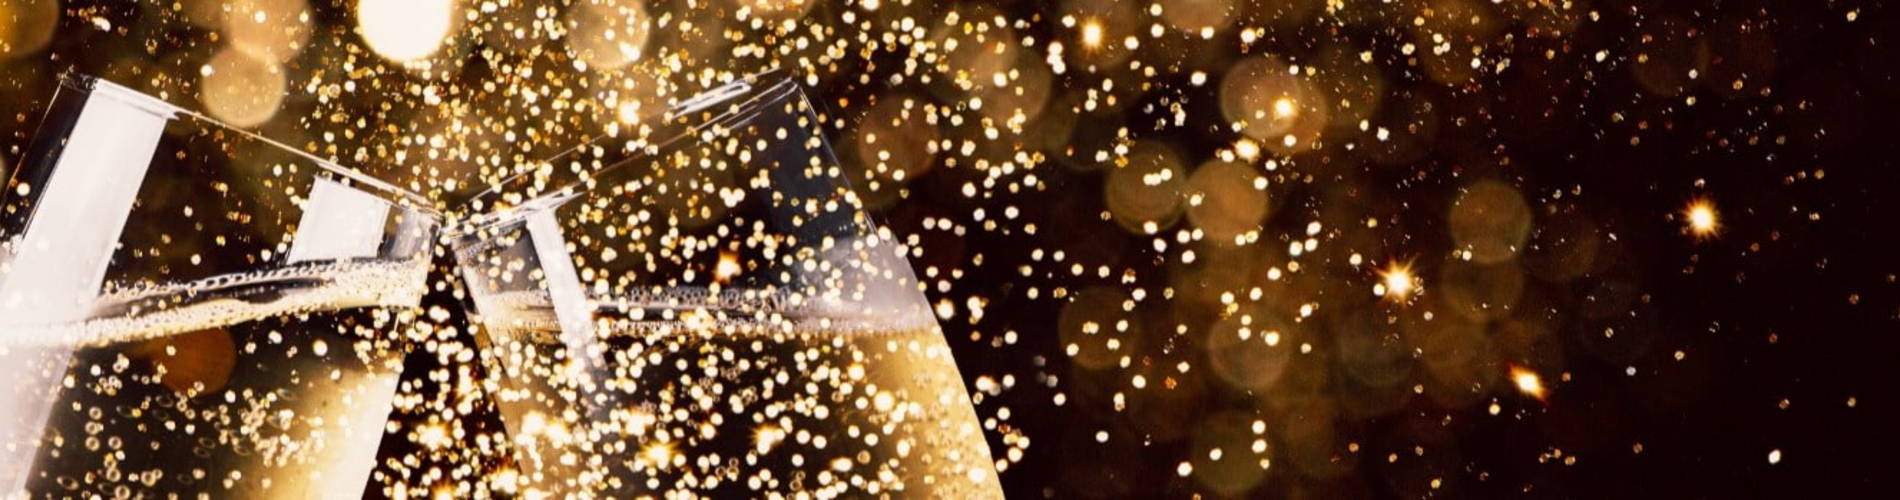 champagne-celebration-cheers